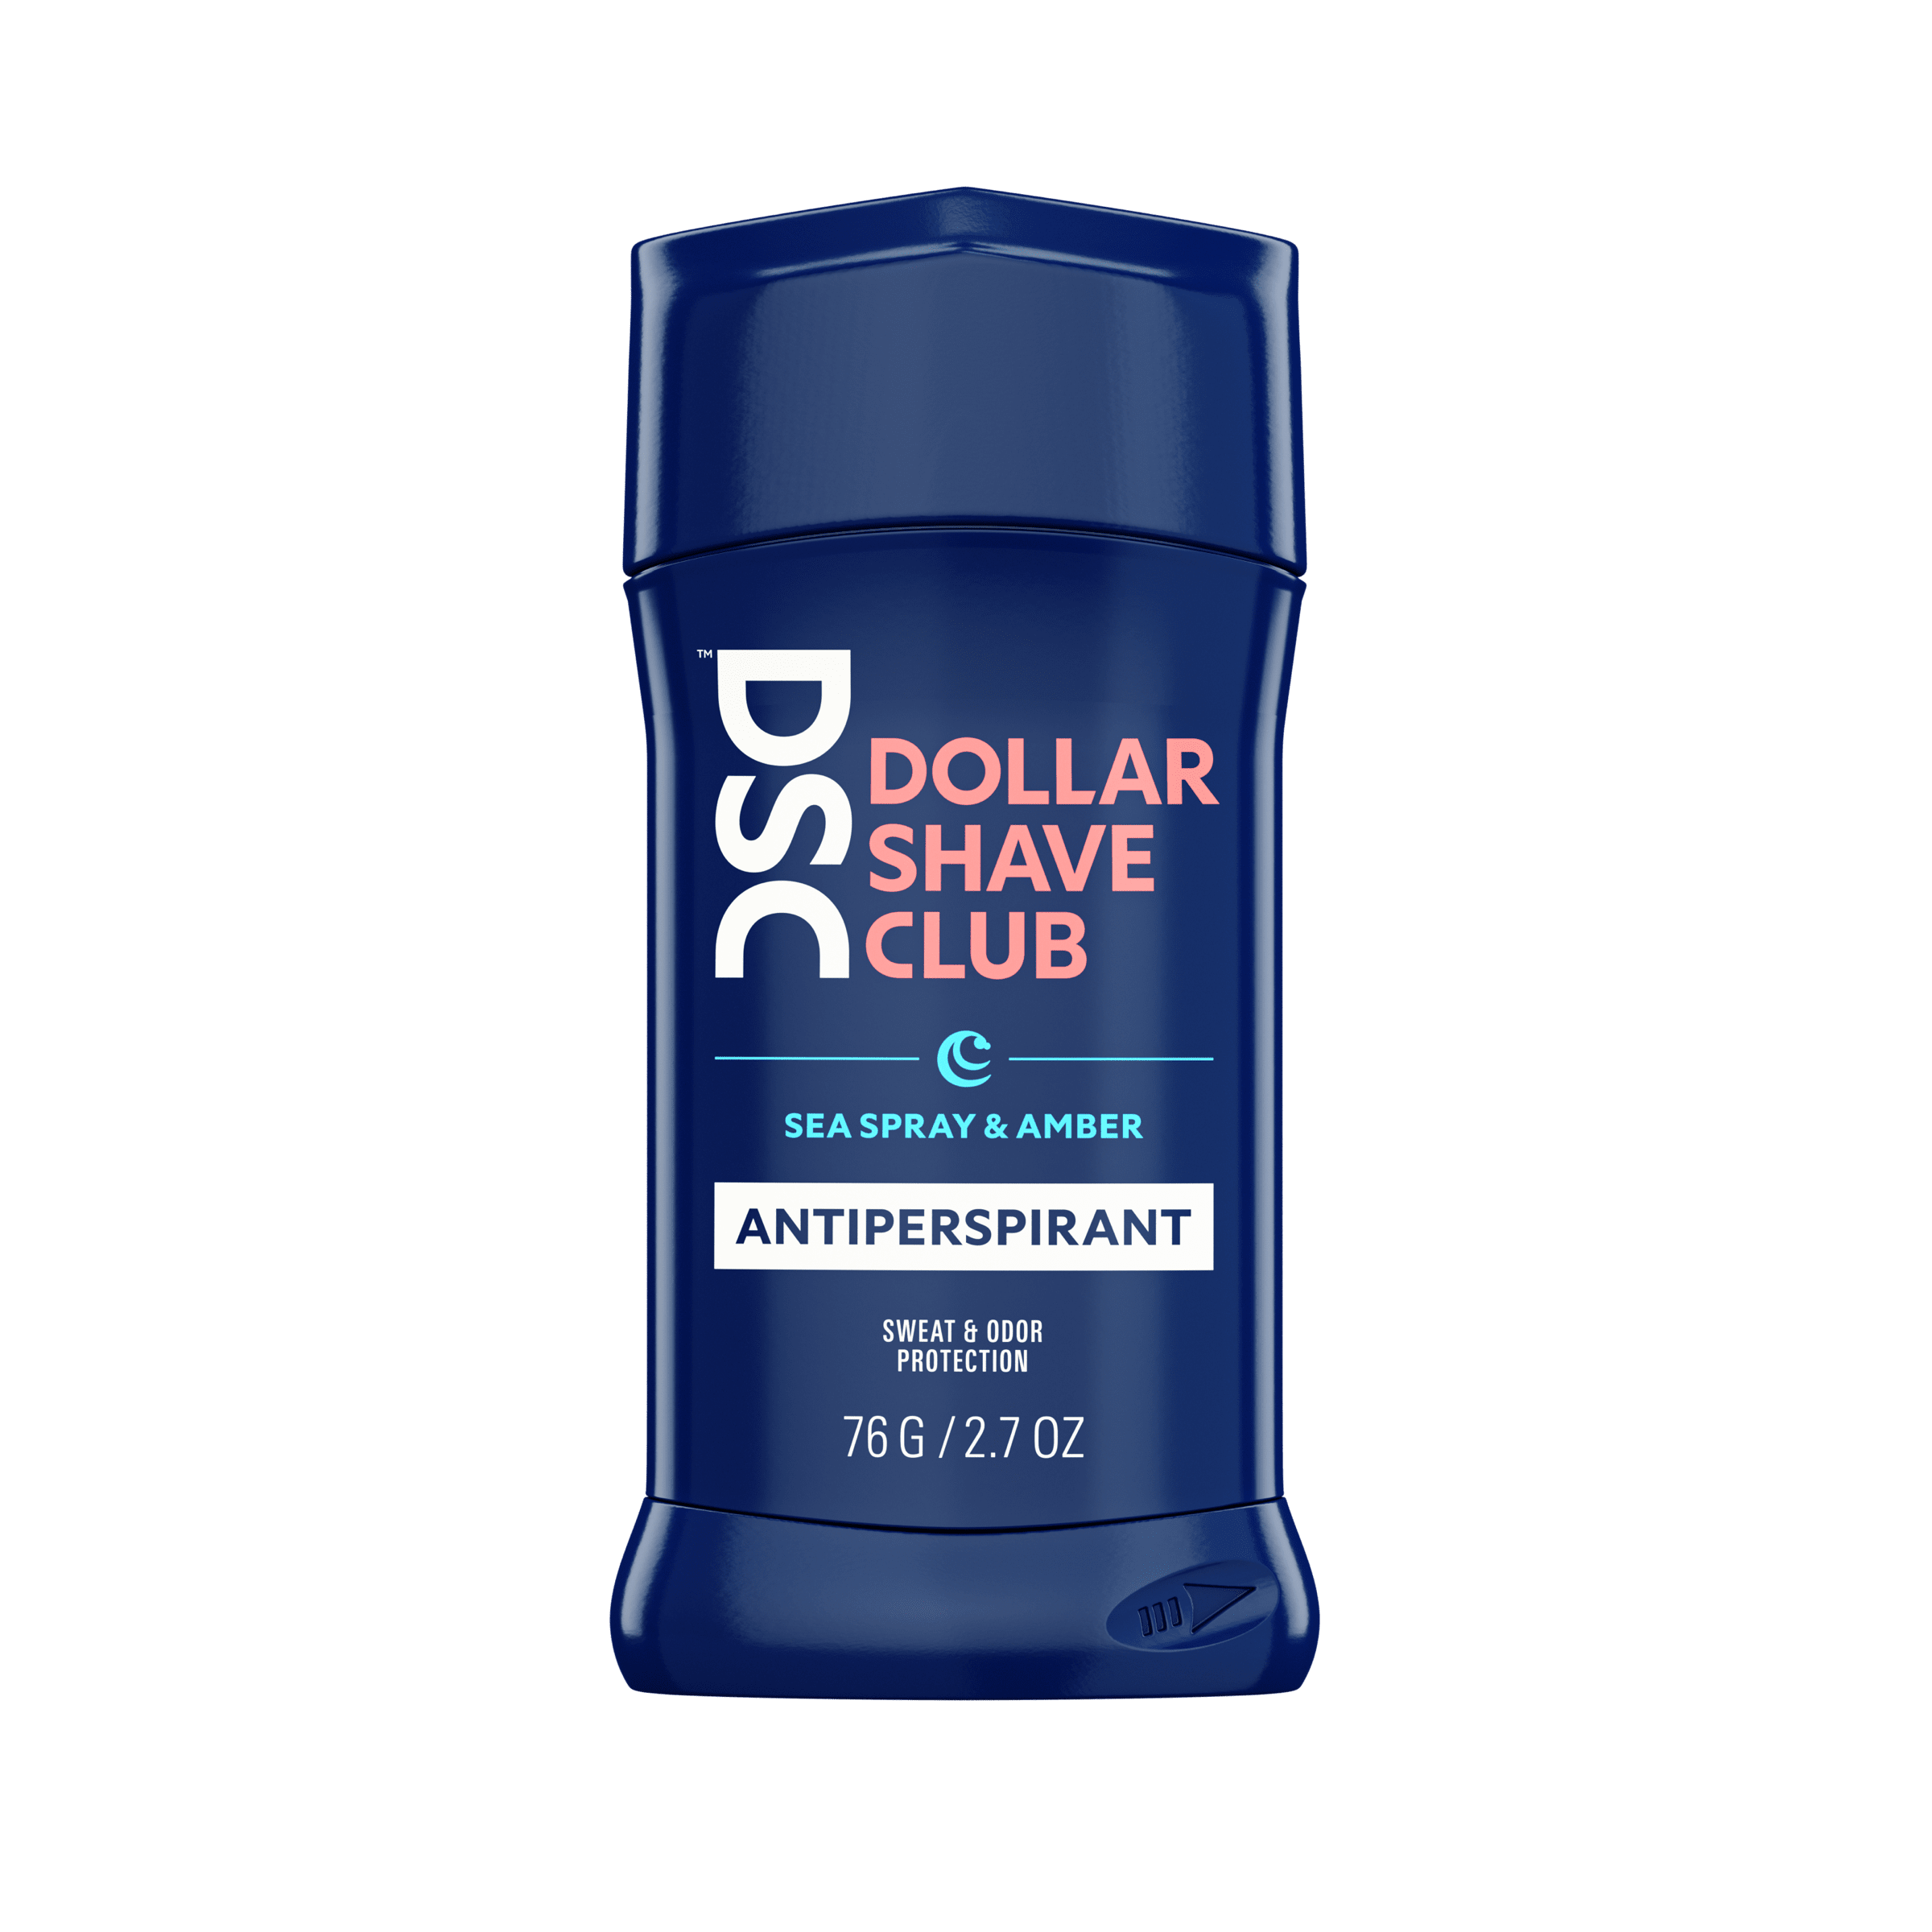 Dollar Shave Club Antiperspirant Sea Spray Amber against blank backdrop.